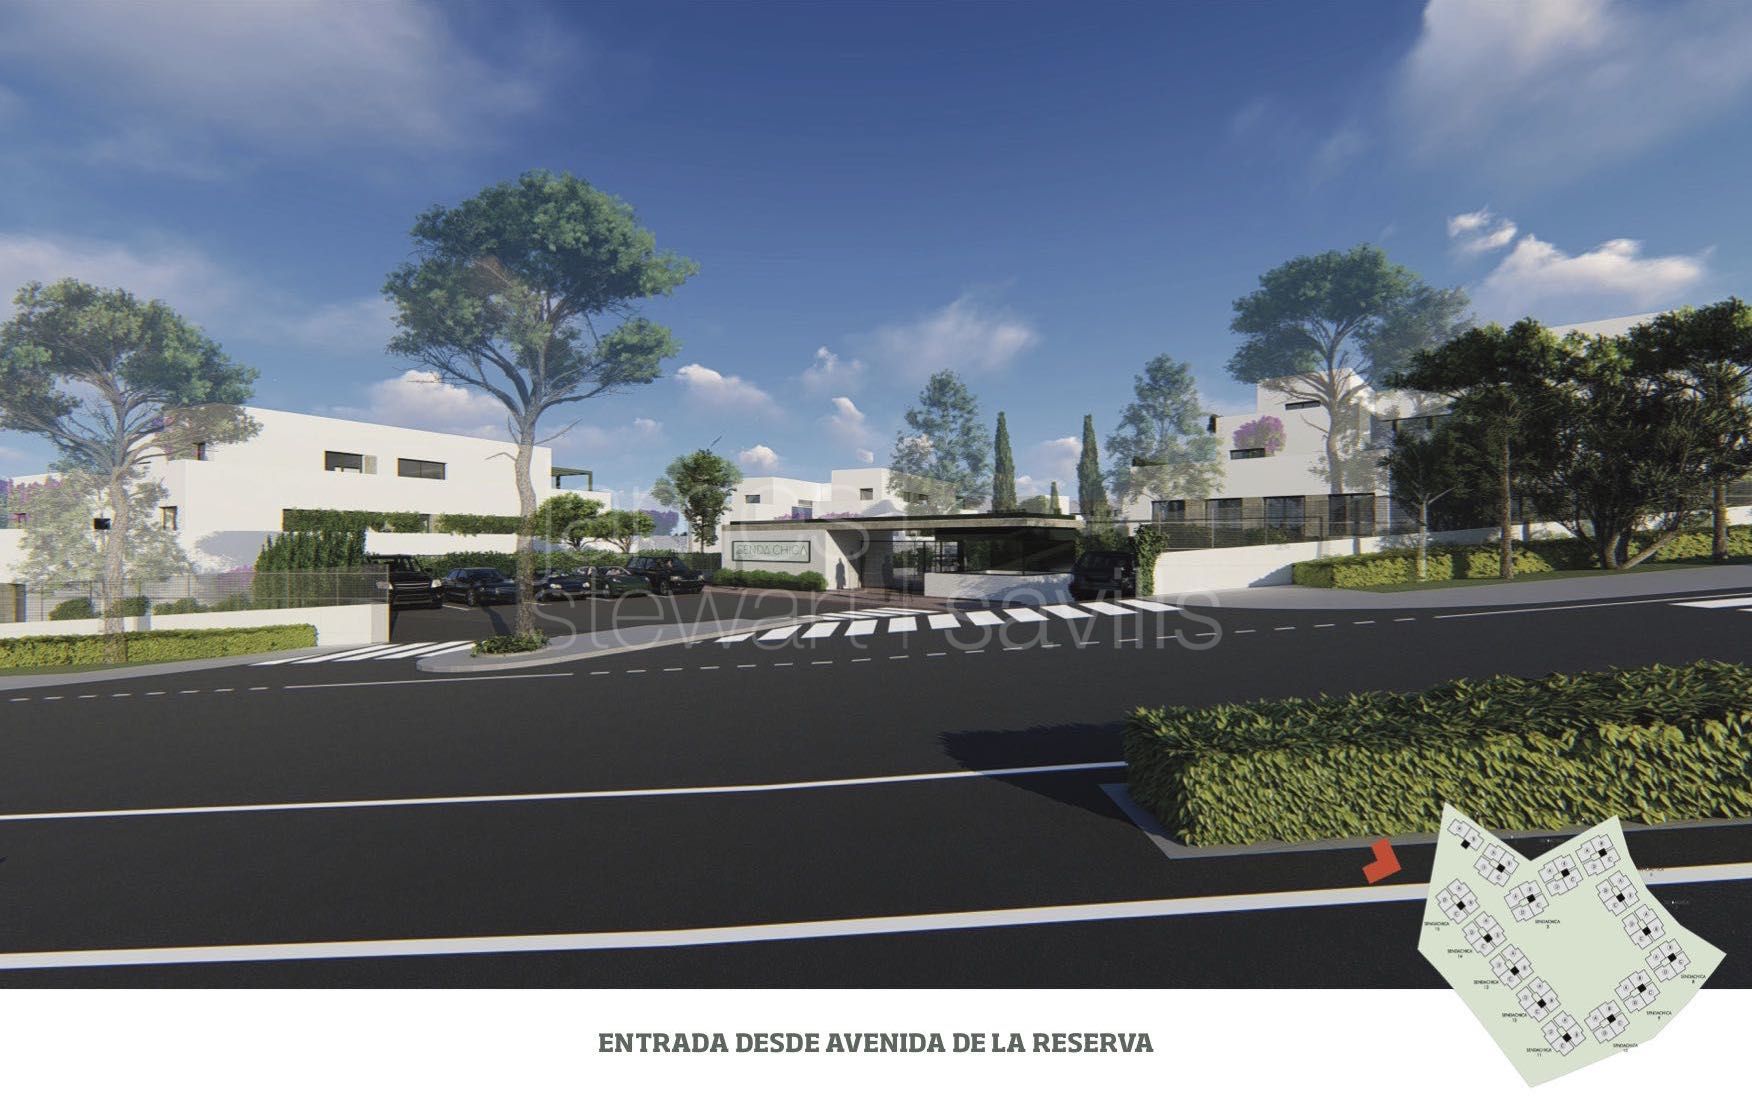 SENDA CHICA - new contemporary gated community within Sotogrande € 510,000 plus VAT